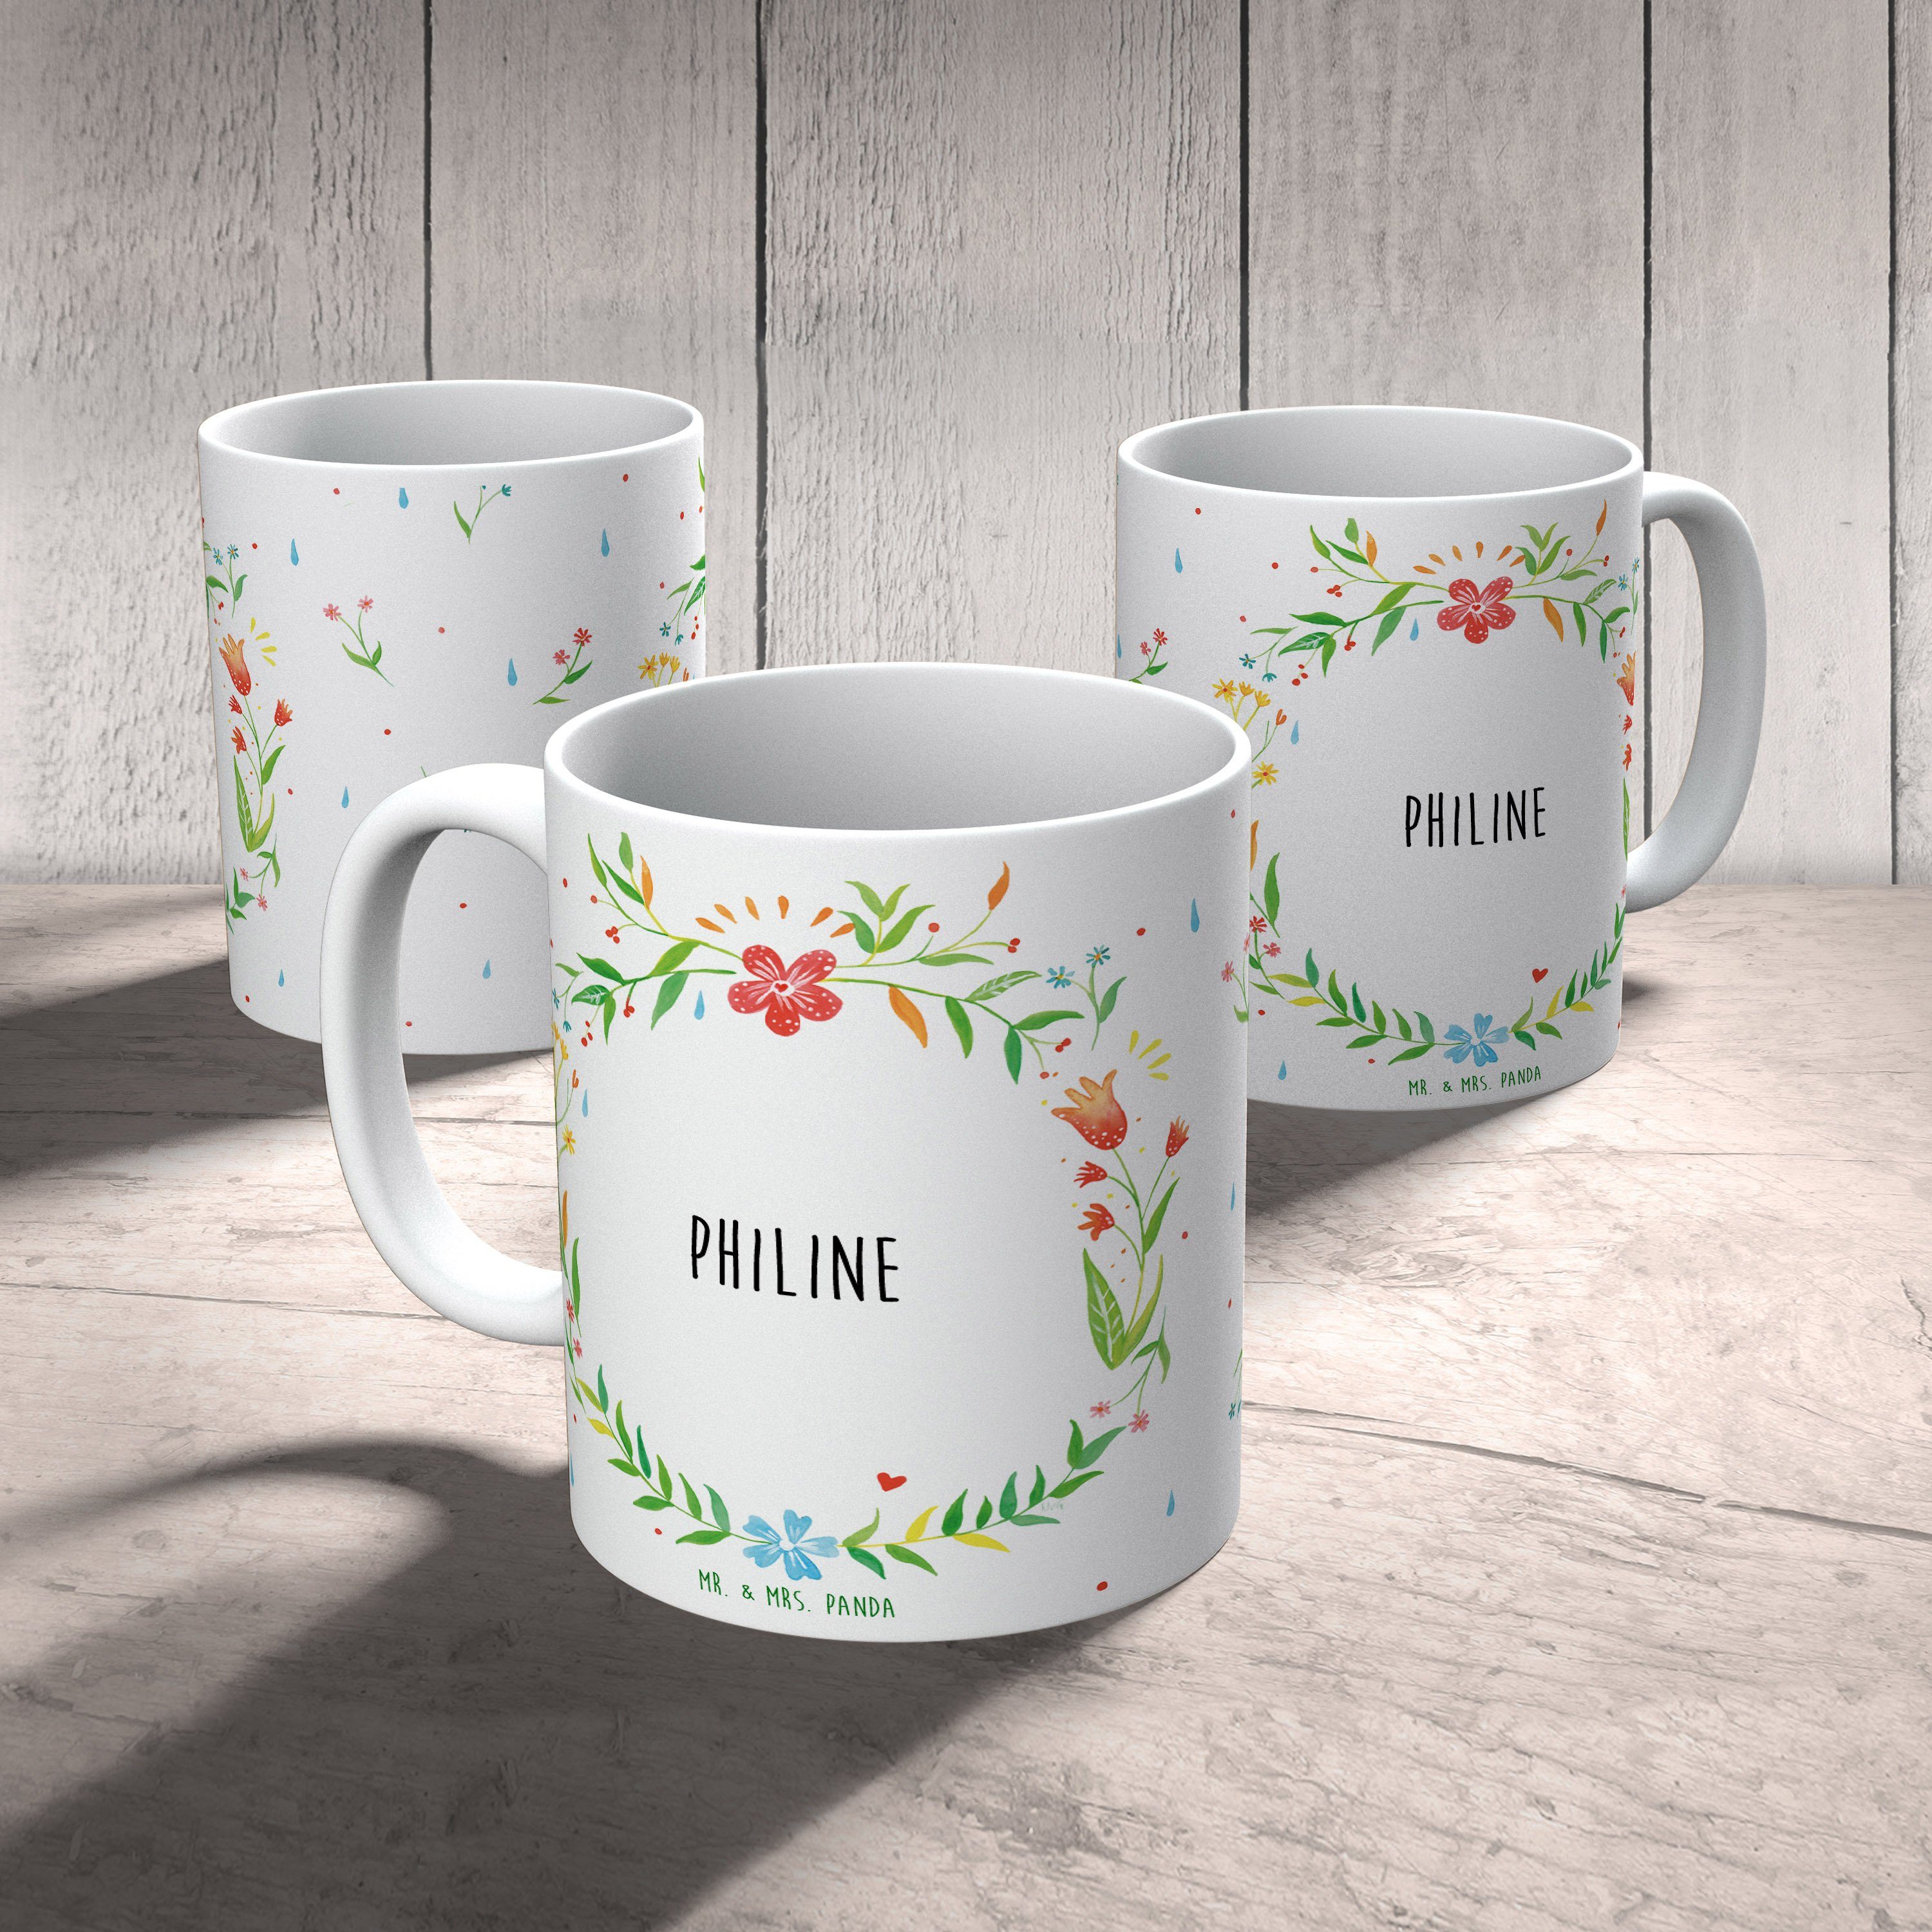 Tasse Mr. Kaffeetasse, - Geschenk, Panda Philine Teet, Mrs. Tasse, Porzellantasse, Keramik & Geschenk